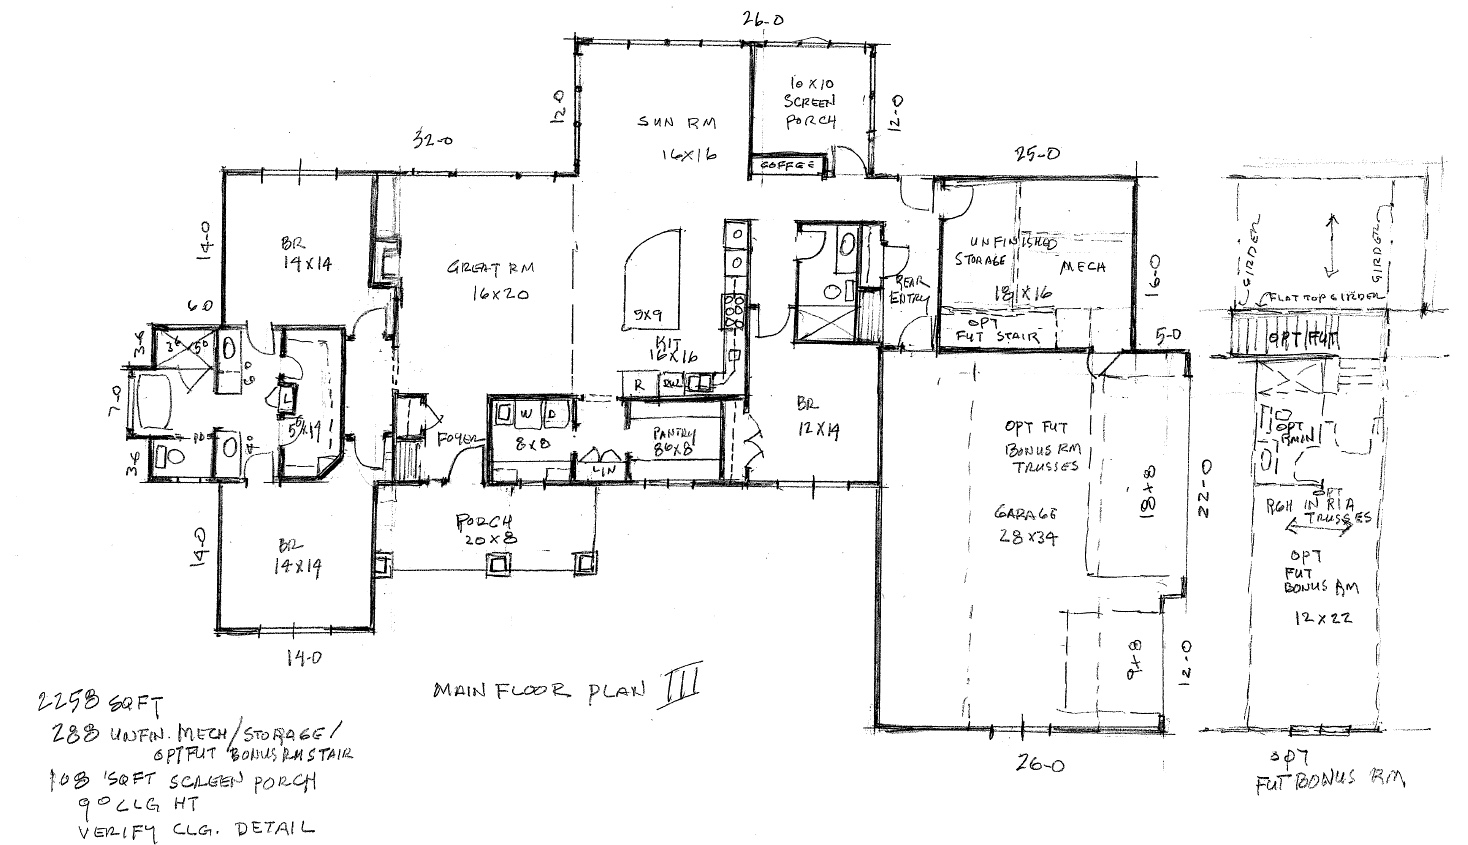 Afton Creek Home Plan Main Floor